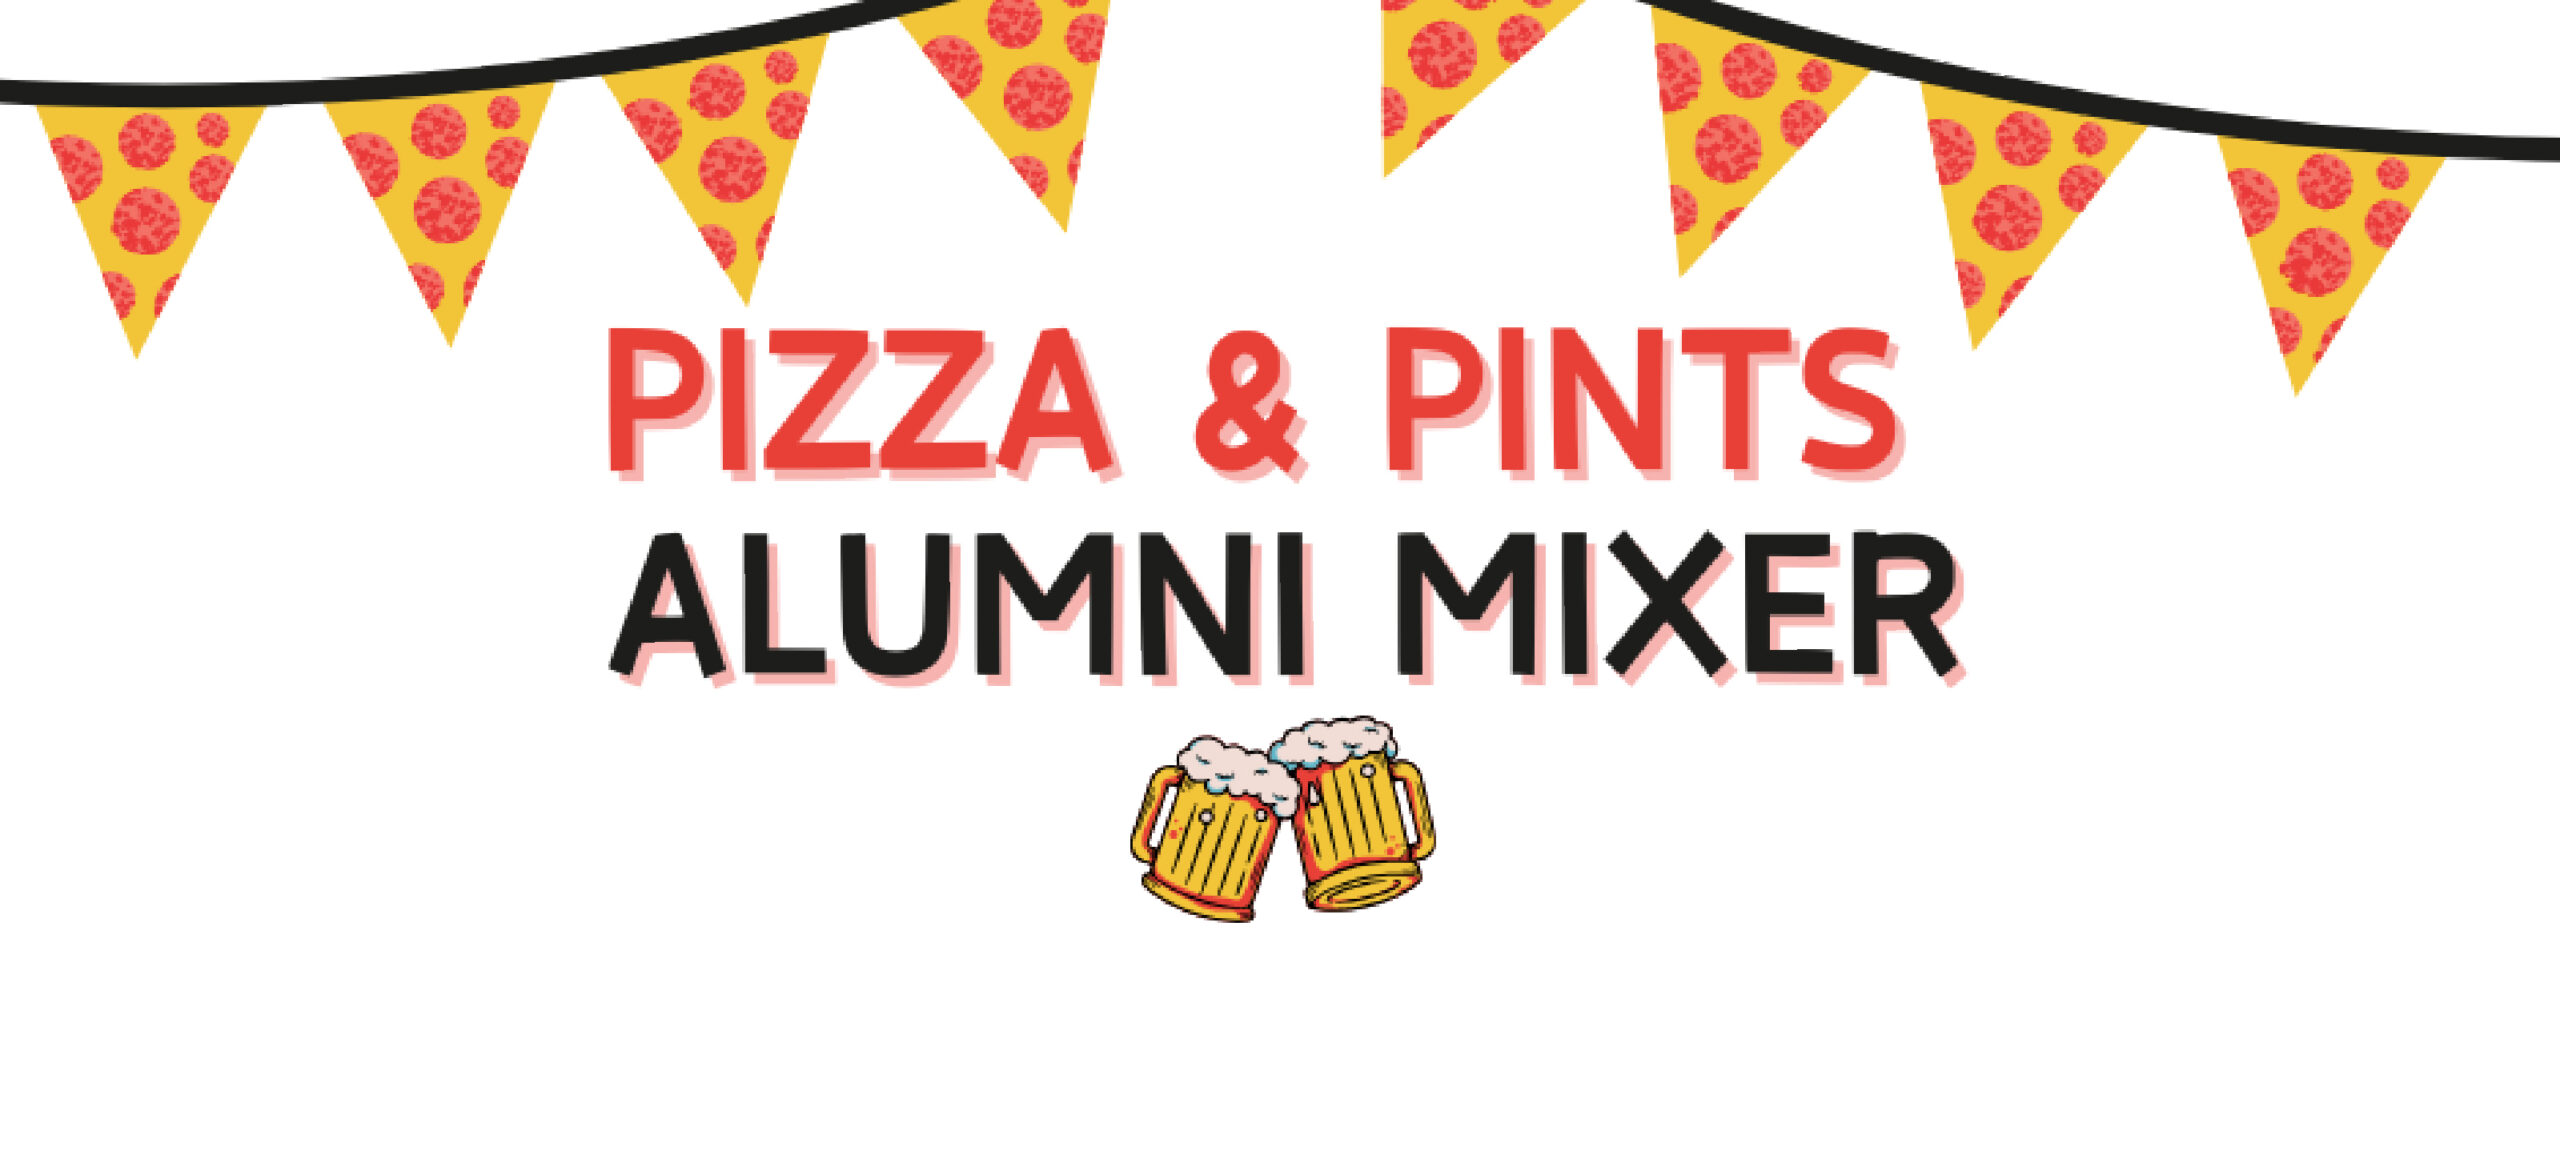 Leadership Lackawanna’s Pizza & Pints Alumni Mixer